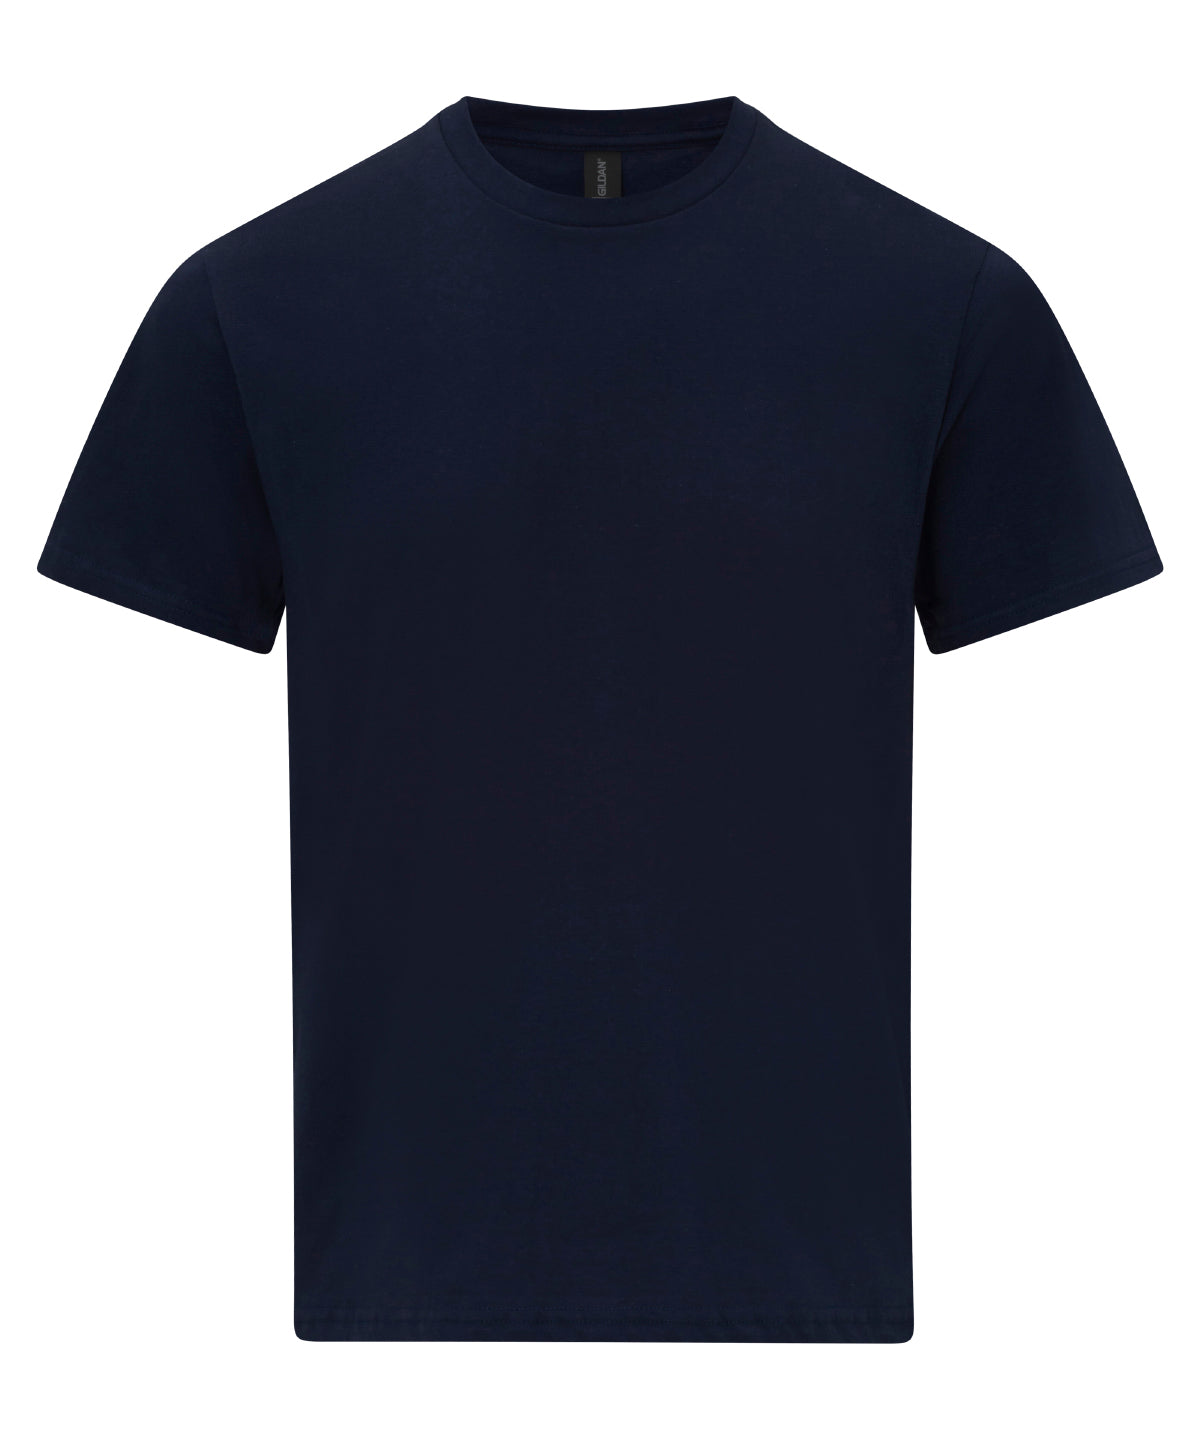 Gildan Softstyle midweight adult t-shirt Navy